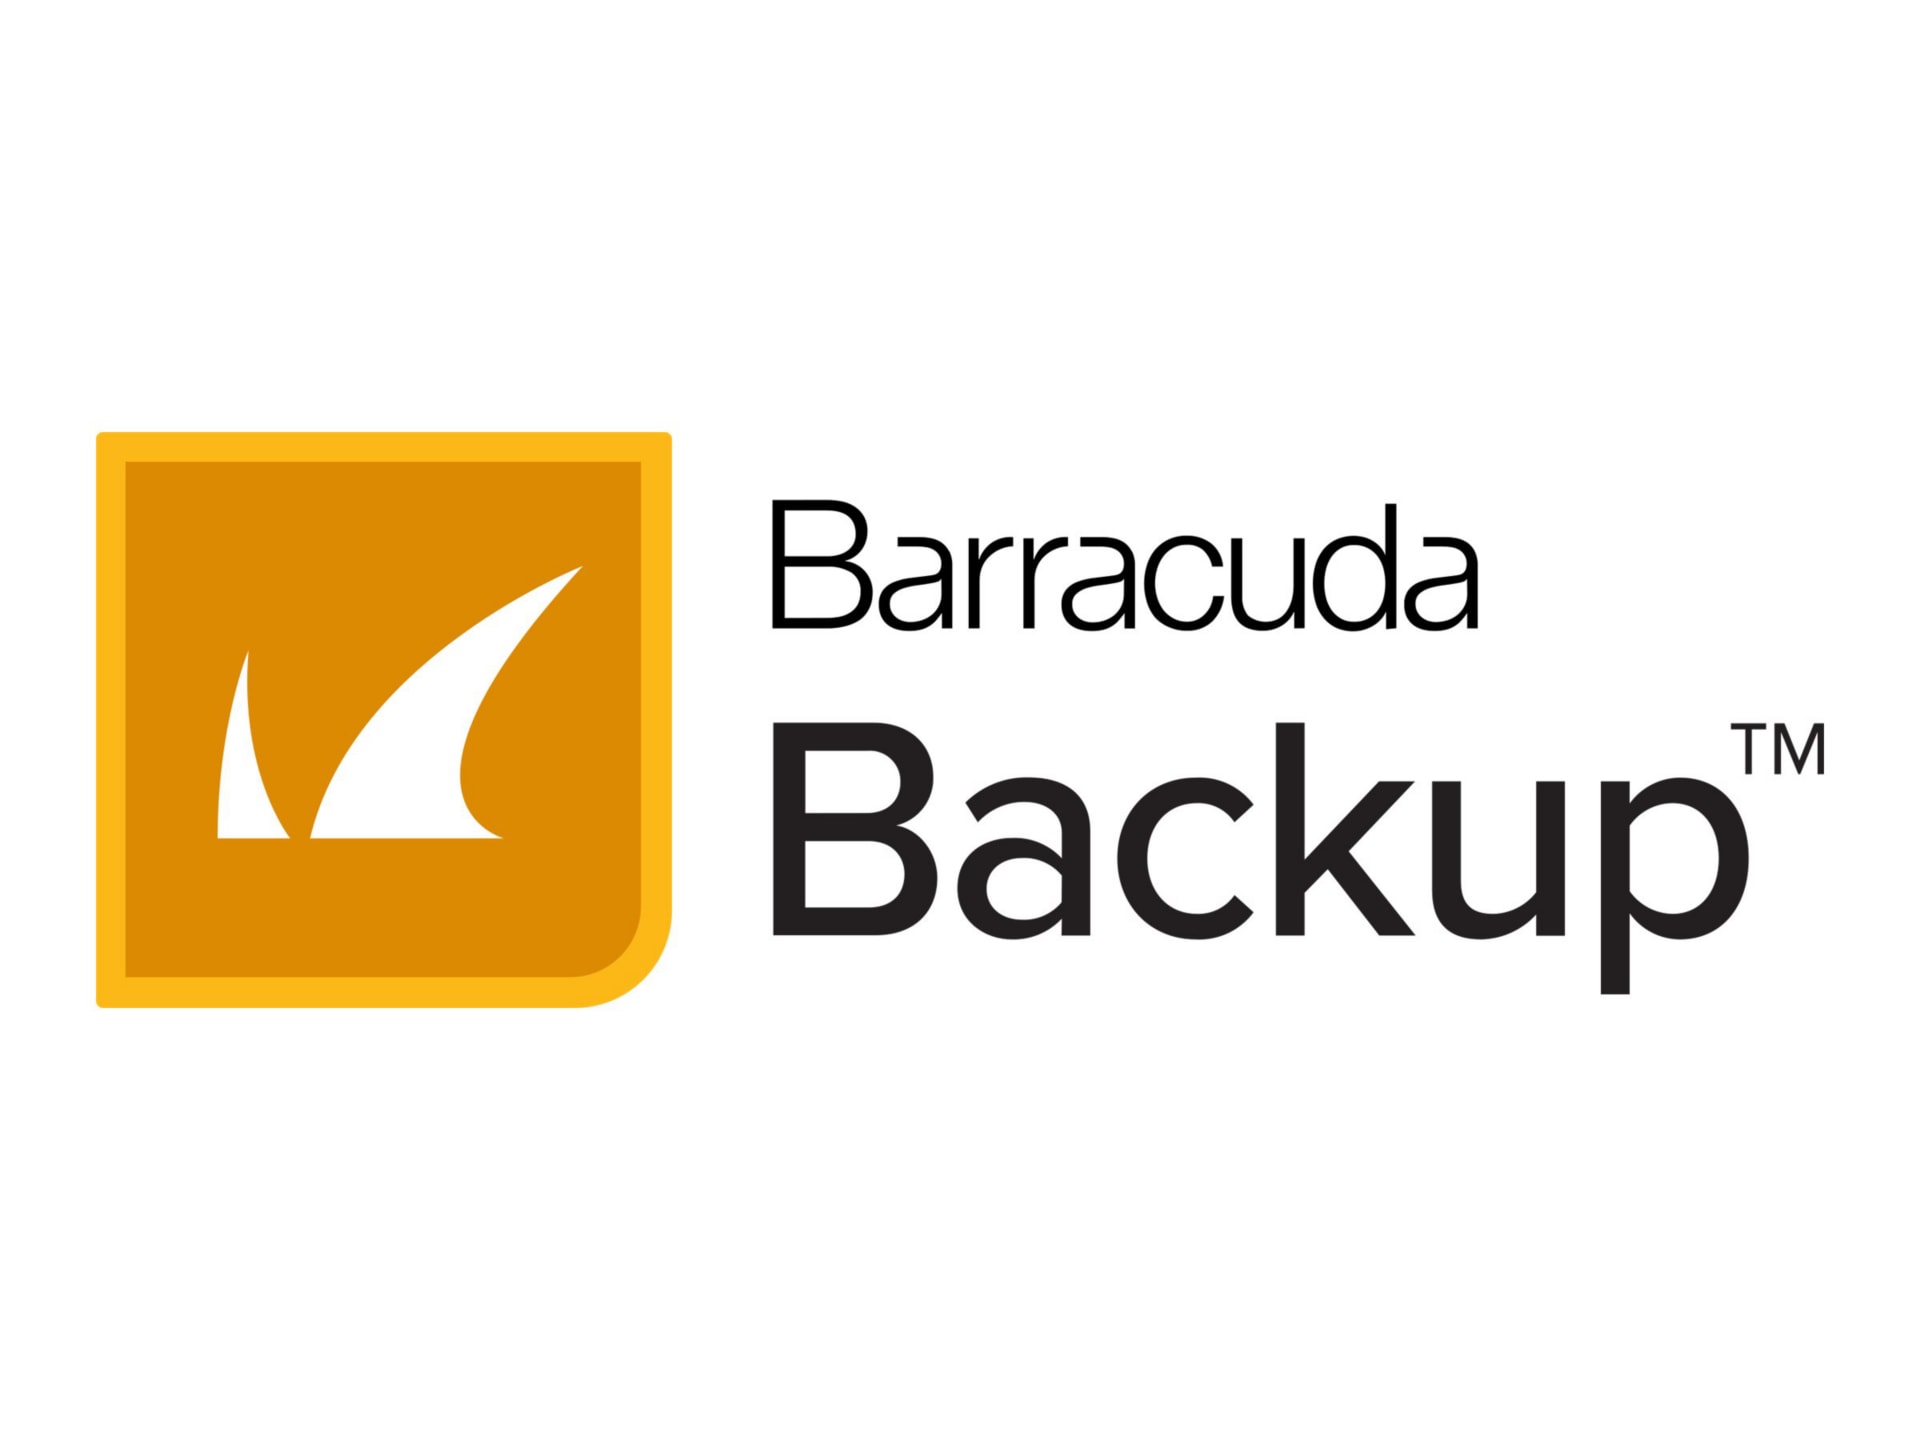 Barracuda Backup Vx - subscription license (1 month) - 1 TB cloud storage space